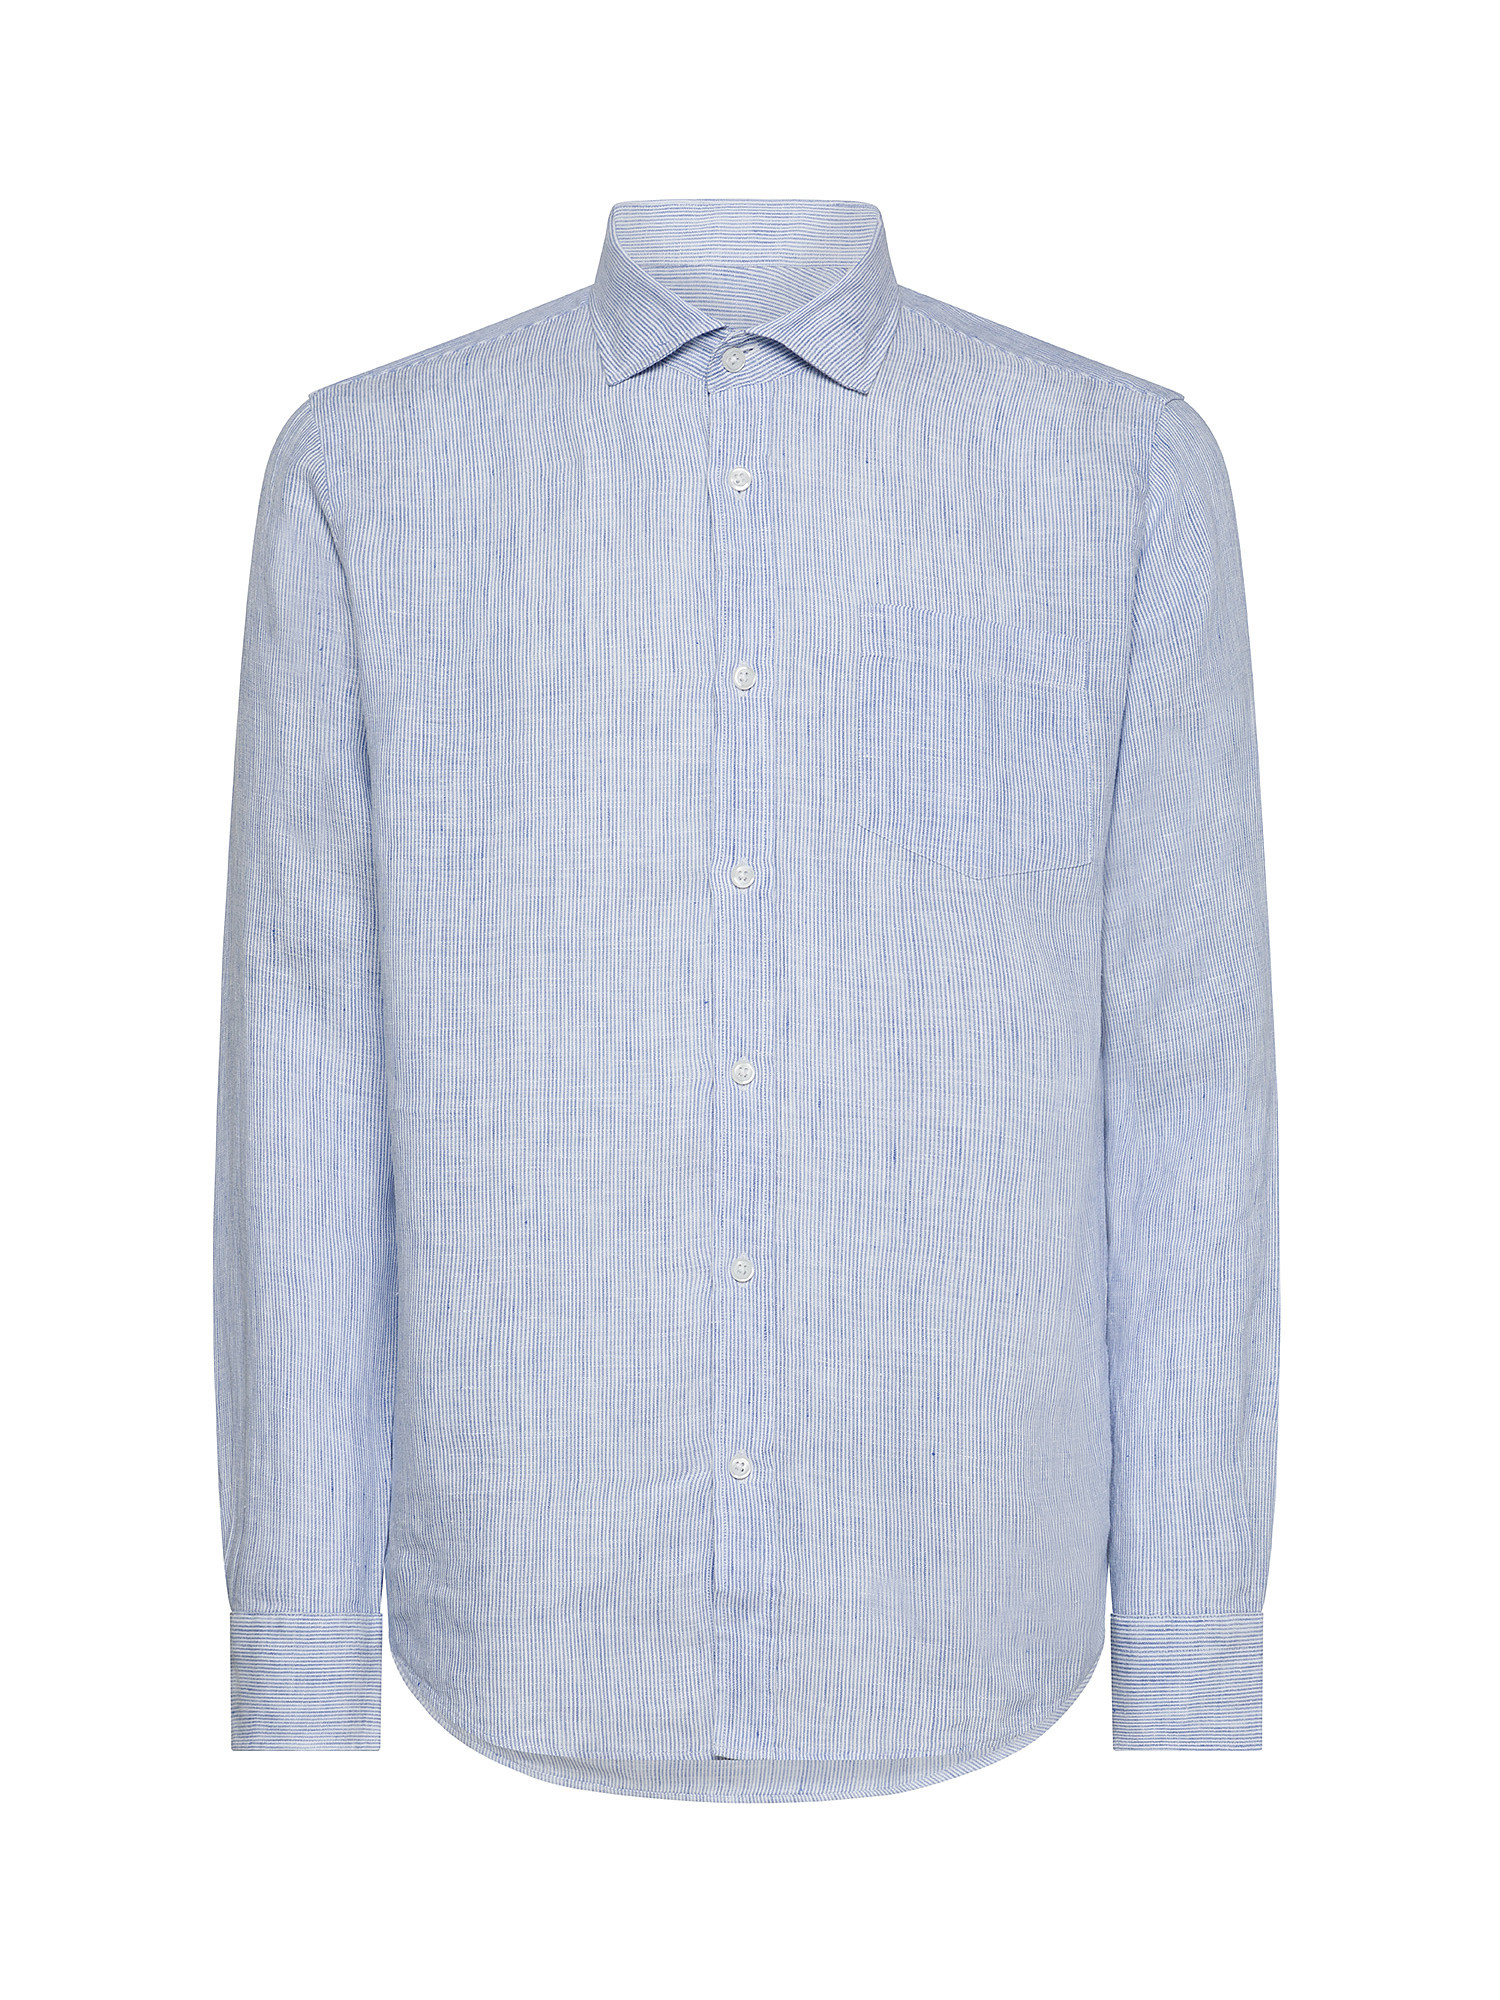 Luca D'Altieri - Tailor fit shirt in pure linen, Blue, large image number 0